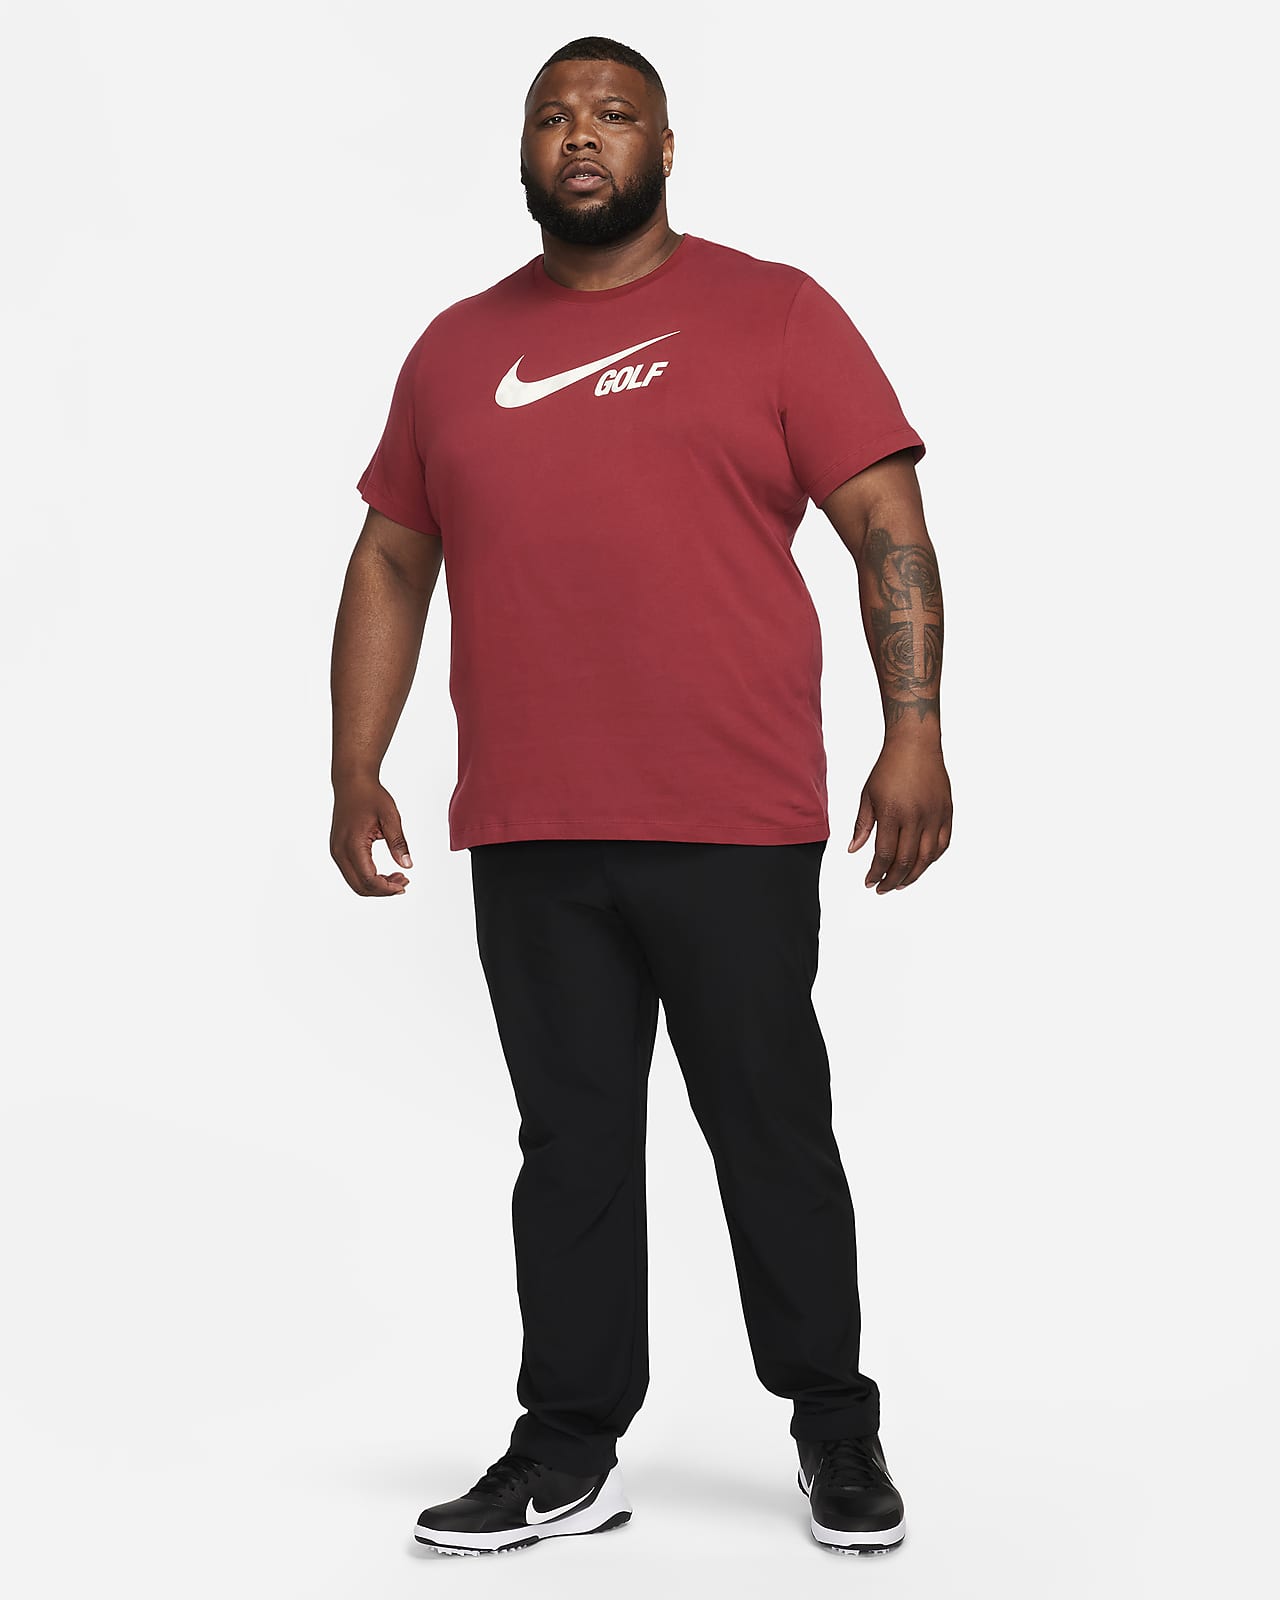 Nike Golf T-Shirt.